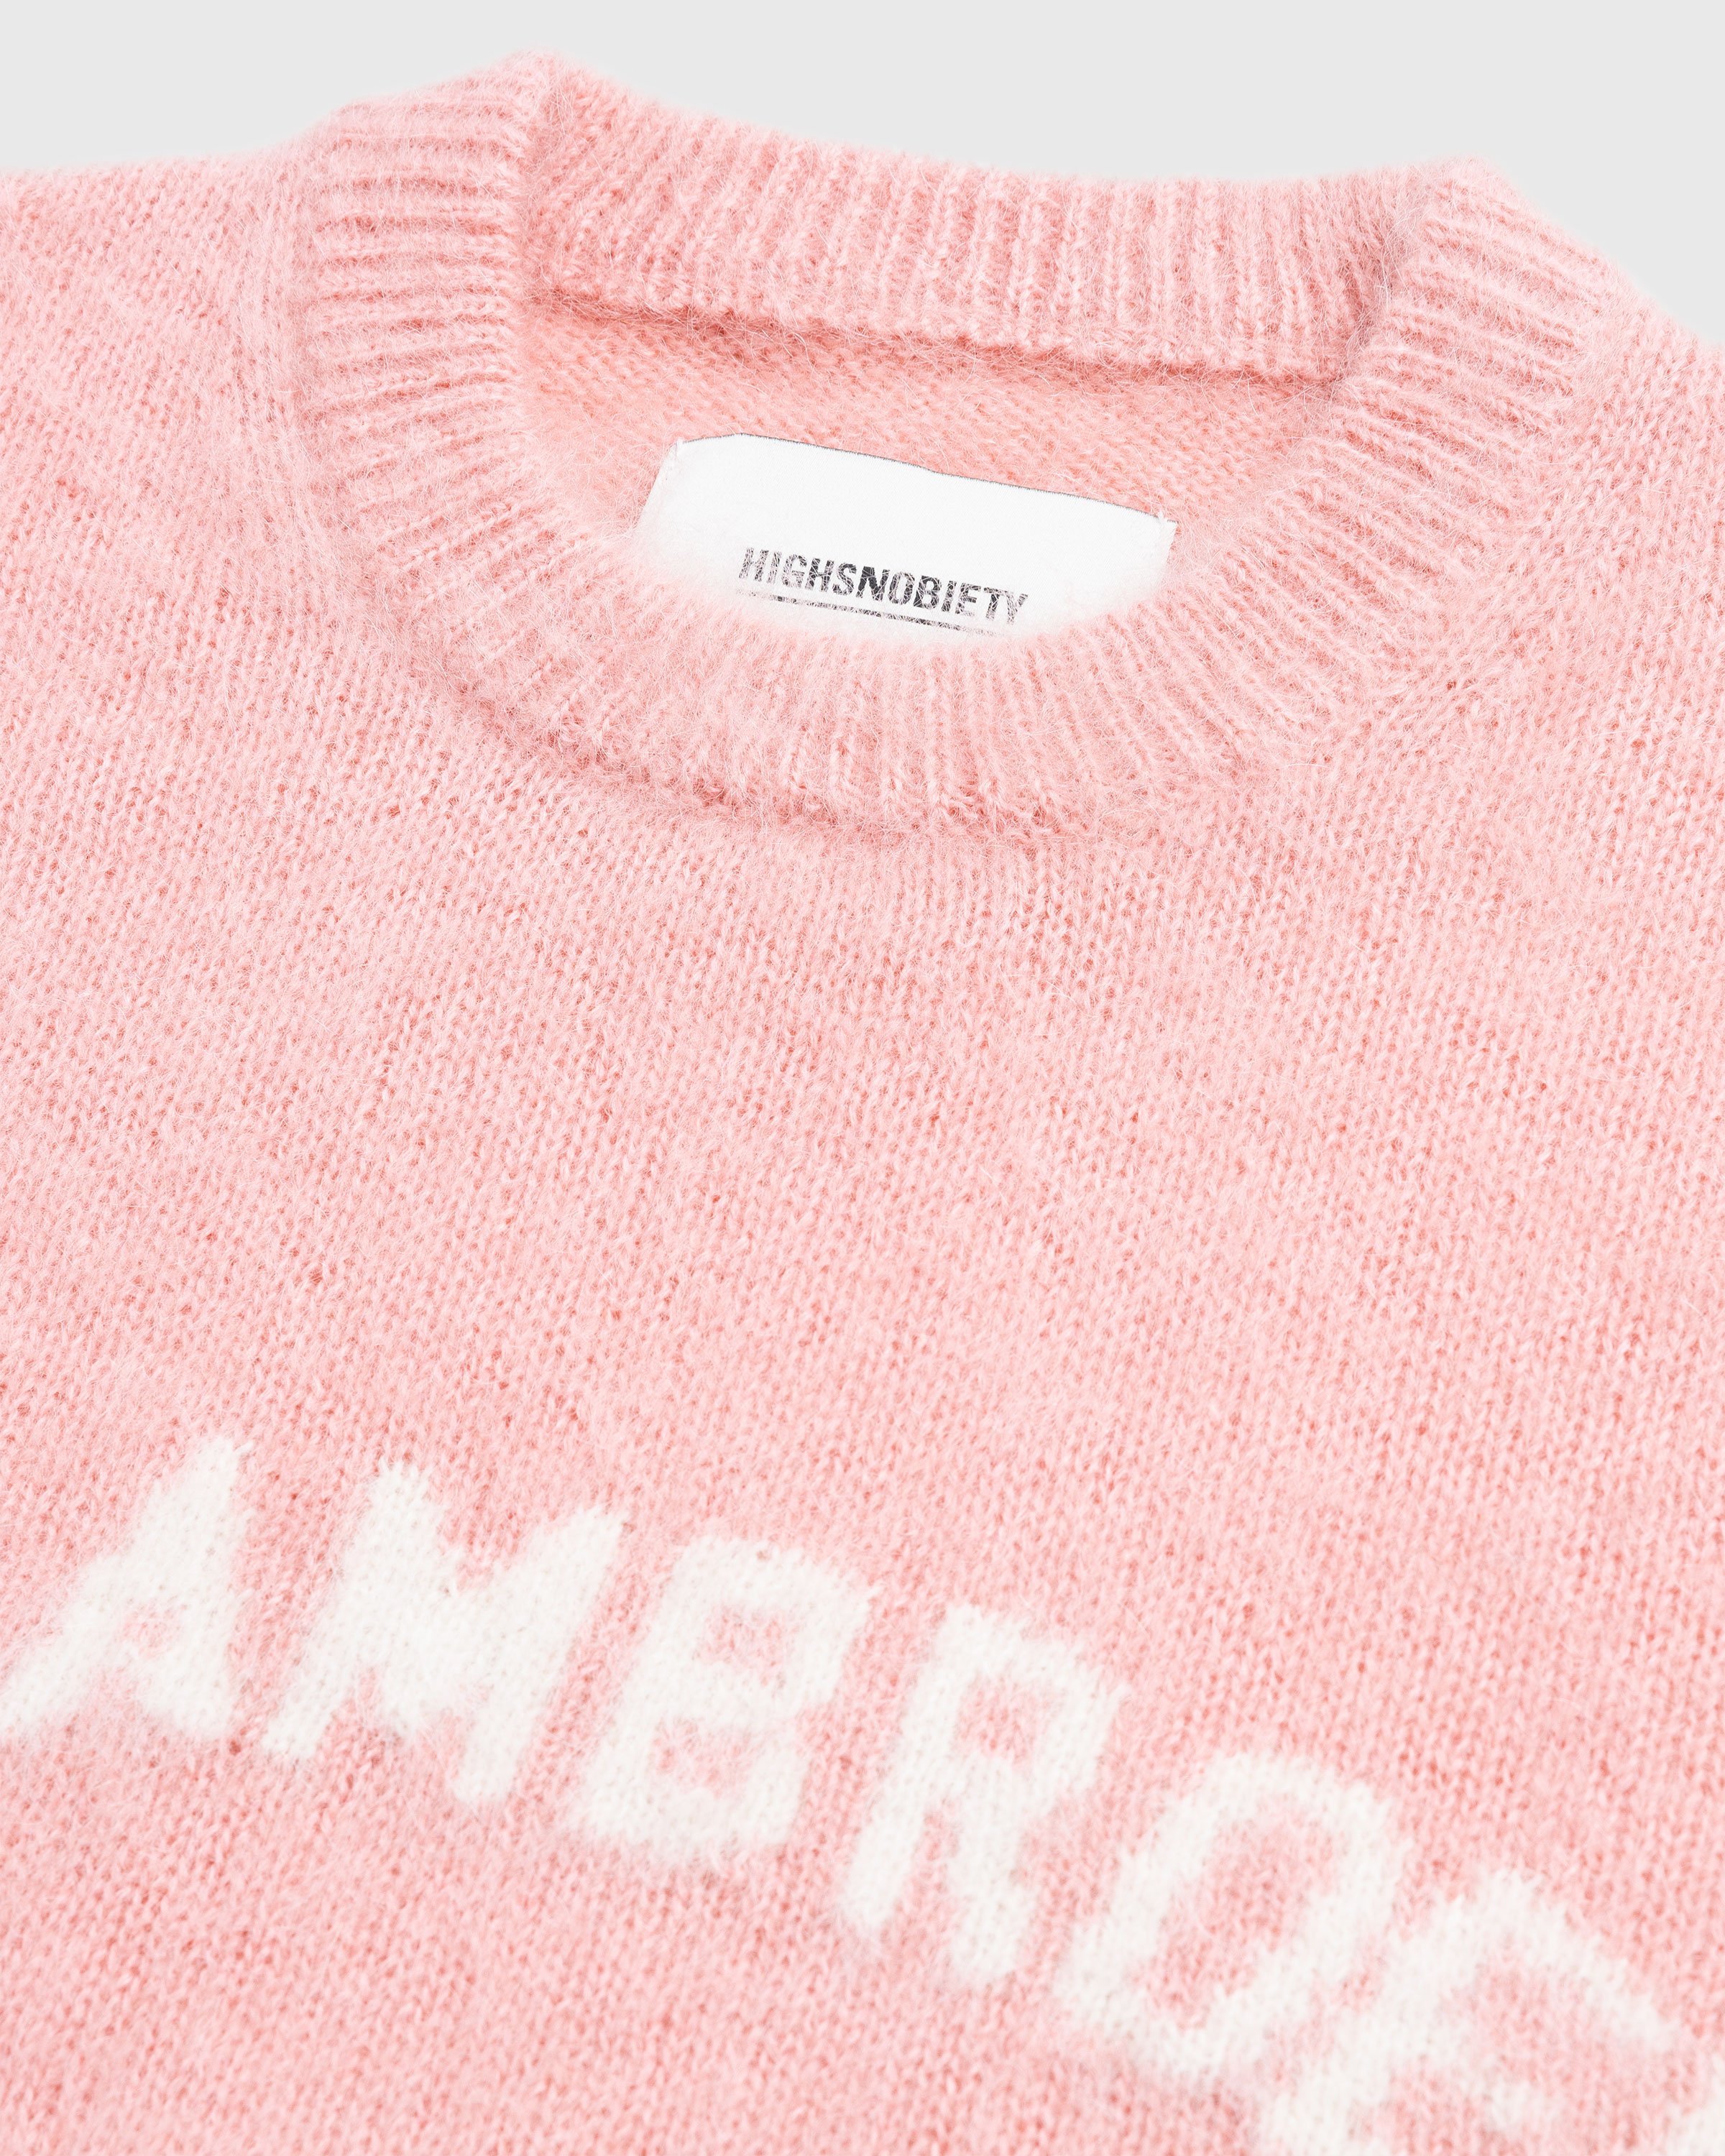 Highsnobiety x Sant Ambroeus - Pink Knit Crewneck - Clothing - Pink - Image 6